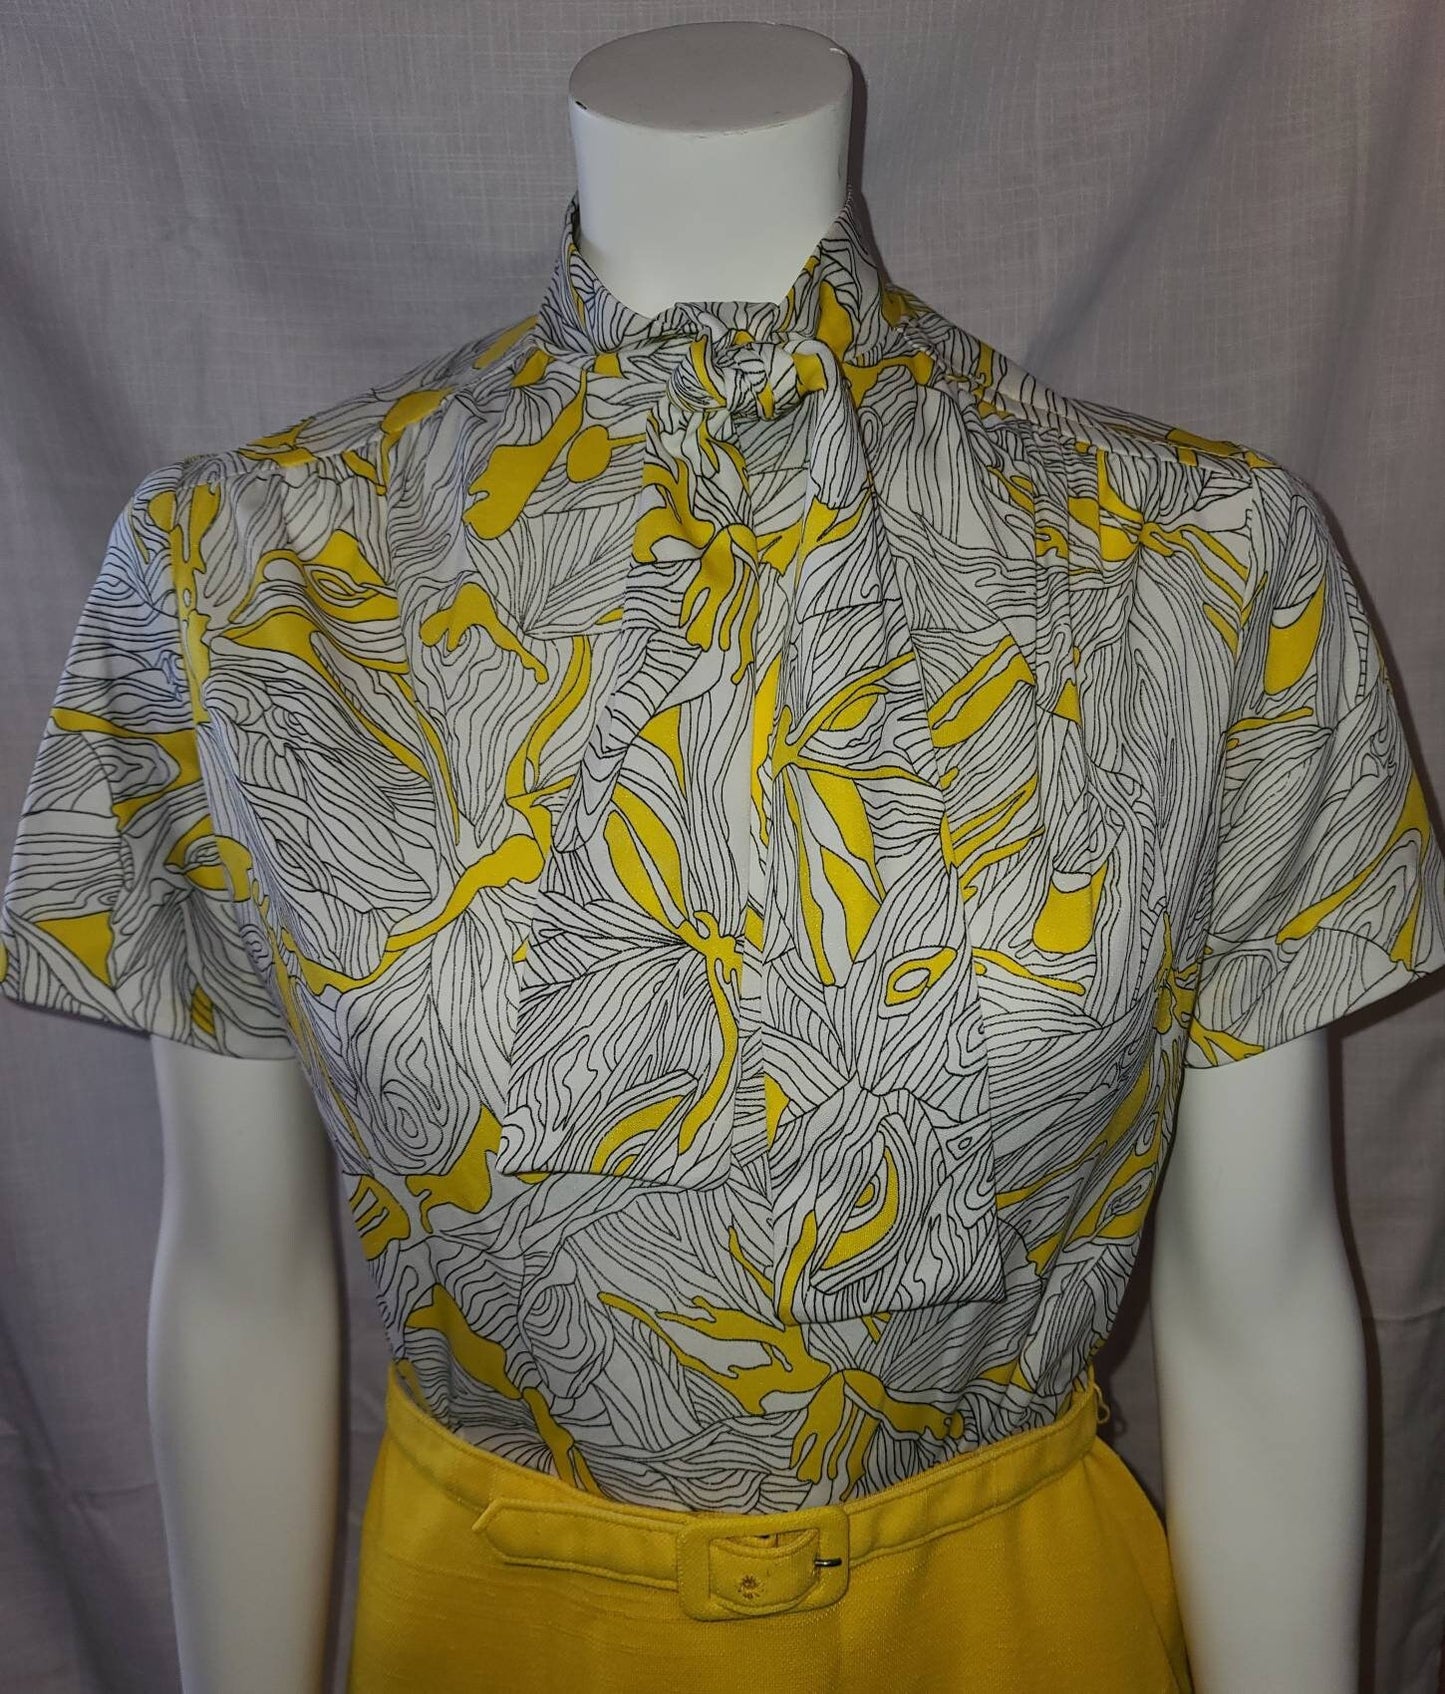 SALE Vintage 1960s Dress Bright Yellow White Floral Print Neck Tie Neck Bow Dress Belt Mod Go Go XS S chest 34 in.